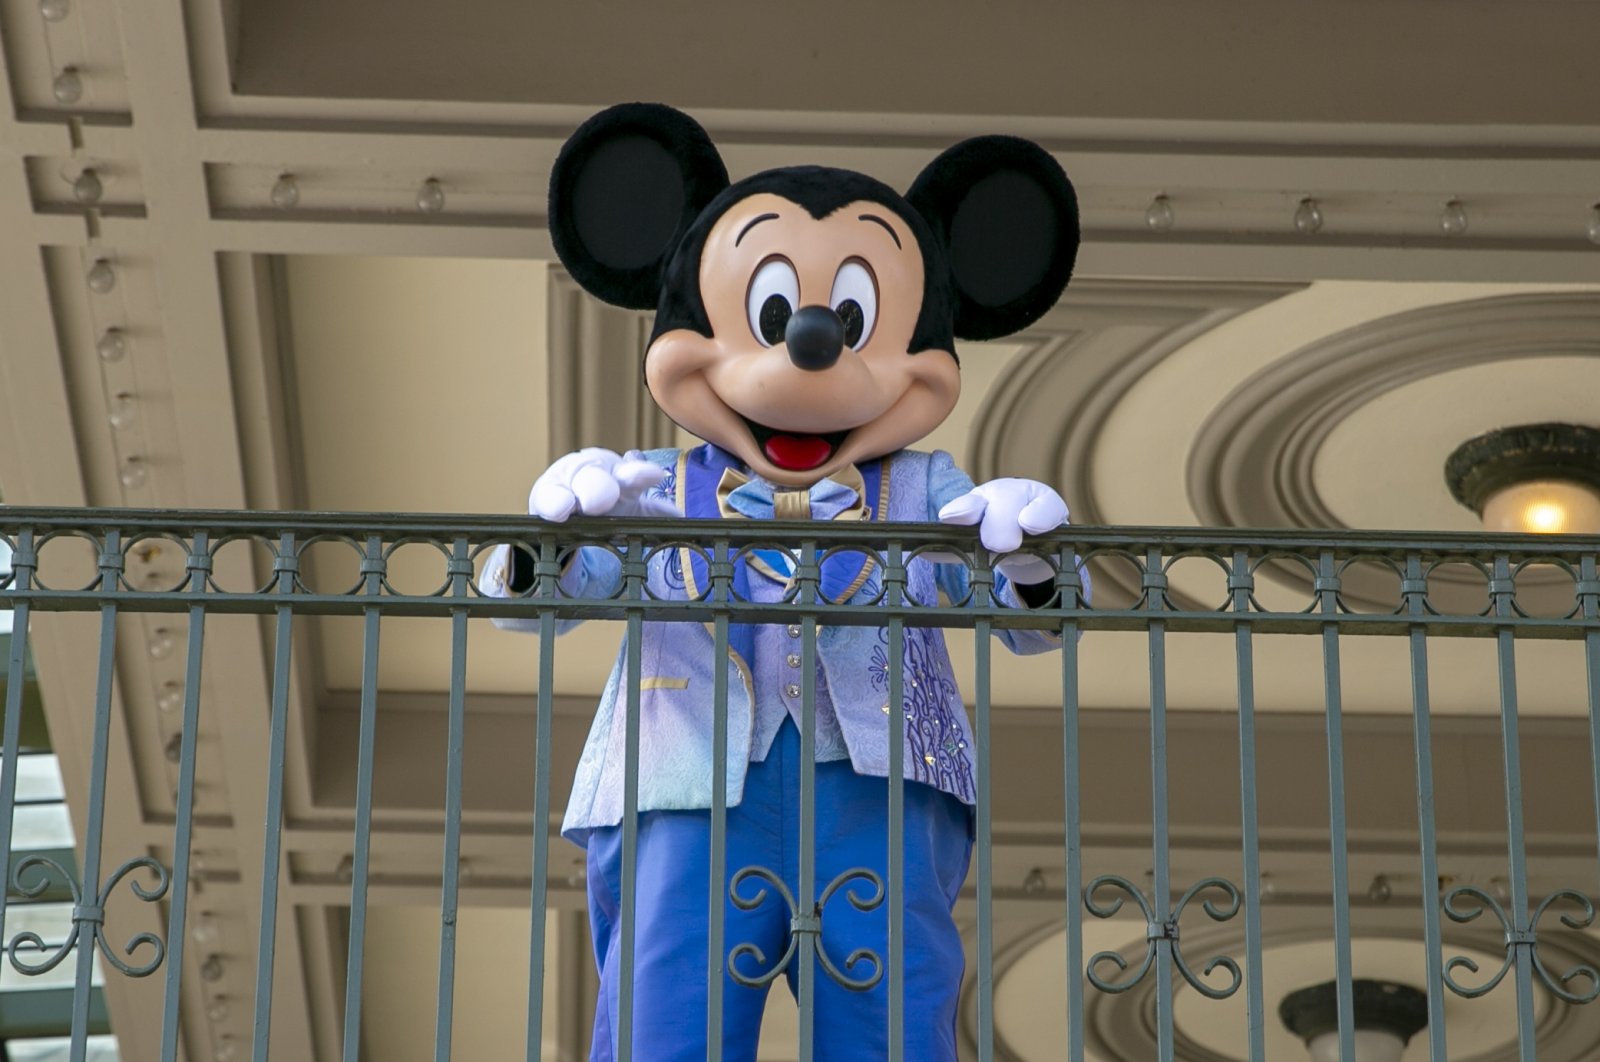 An actor dressed as Mickey Mouse greets visitors at the entrance to Magic Kingdom Park at Walt Disney World Resort, Florida, U.S., April 18, 2022. (AP Photo)